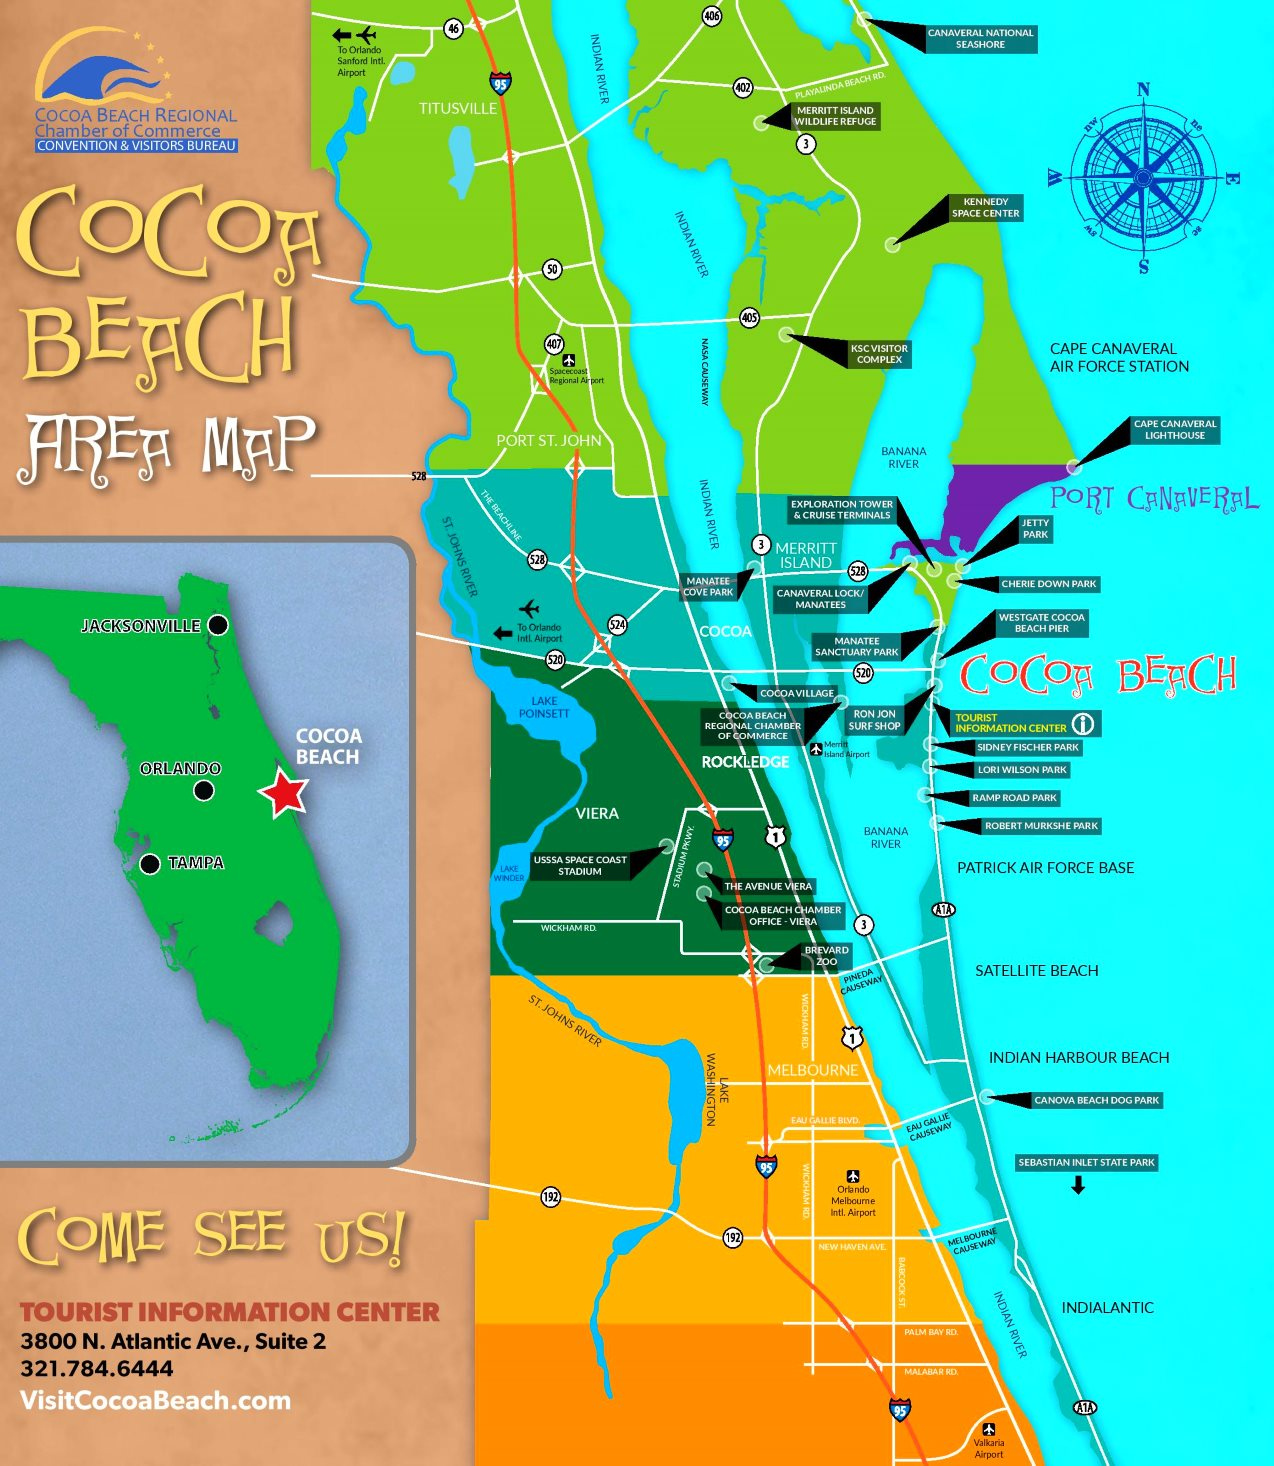 Cocoa Beach Area Map